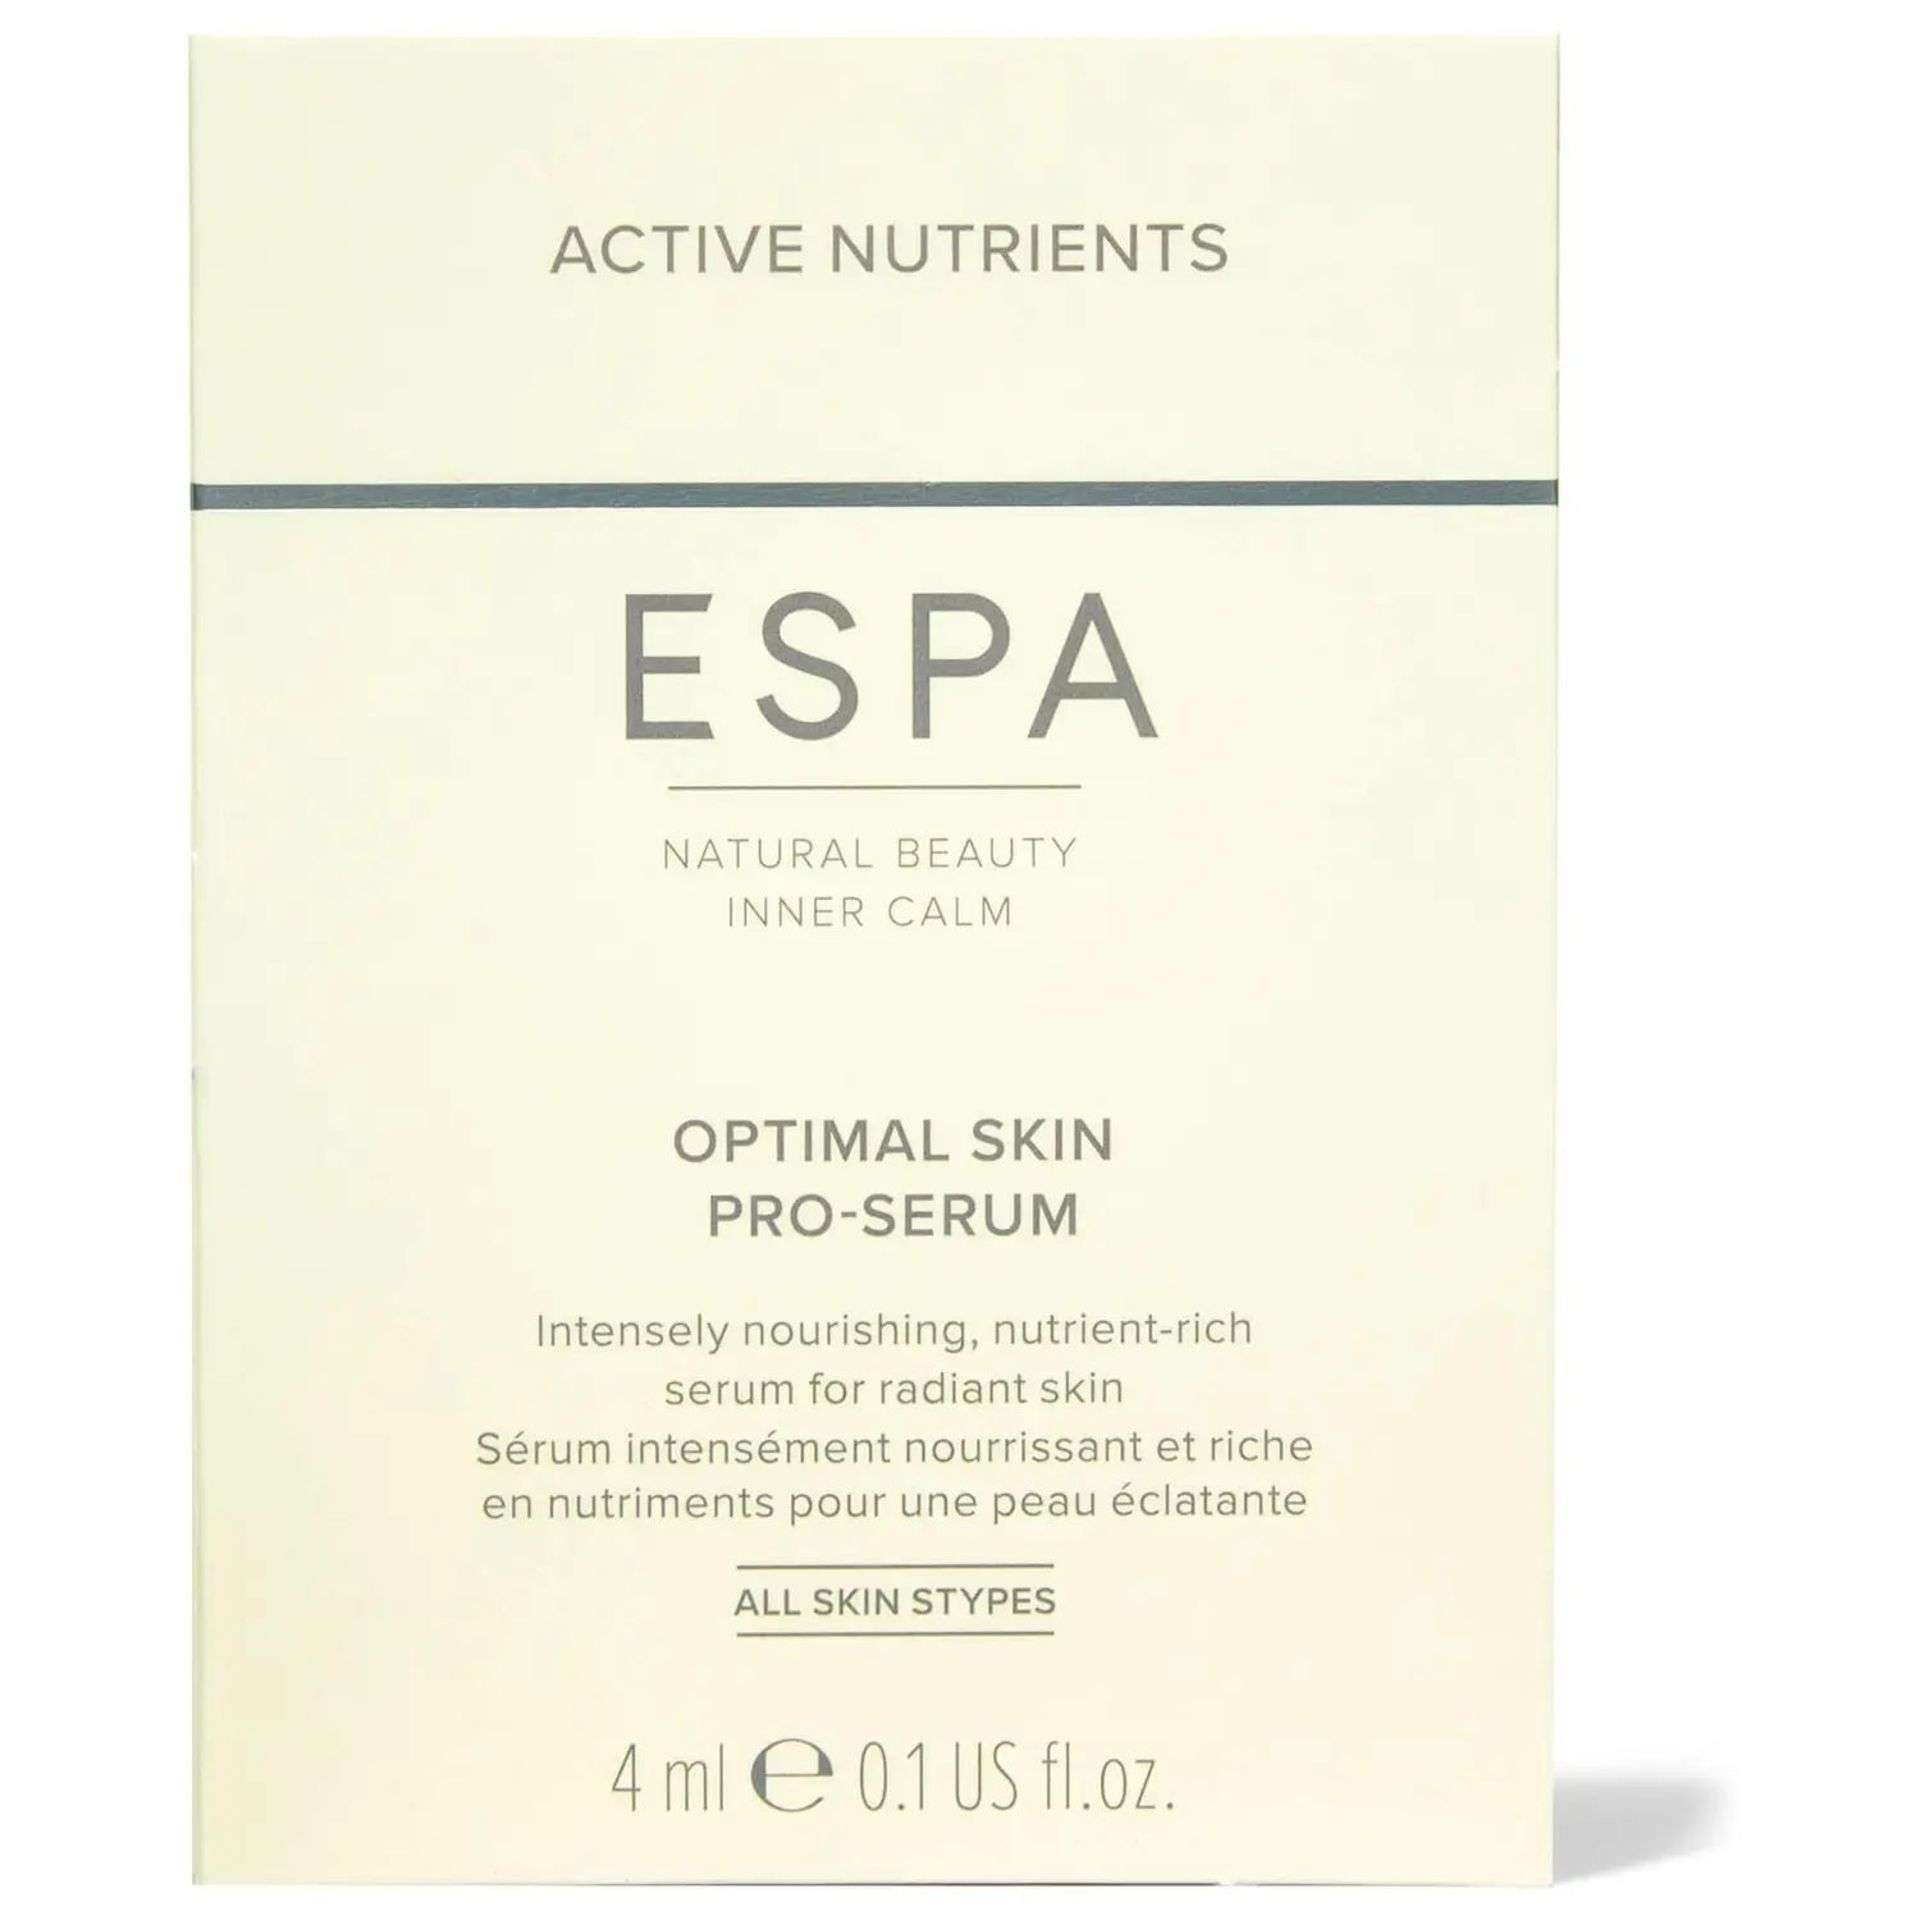 TRADE LOT TO CONTAIN 80x BRAND NEW ESPA Optimal Skin Pro-Serum 4ml RRP £15 EACH. EBR4/5. This